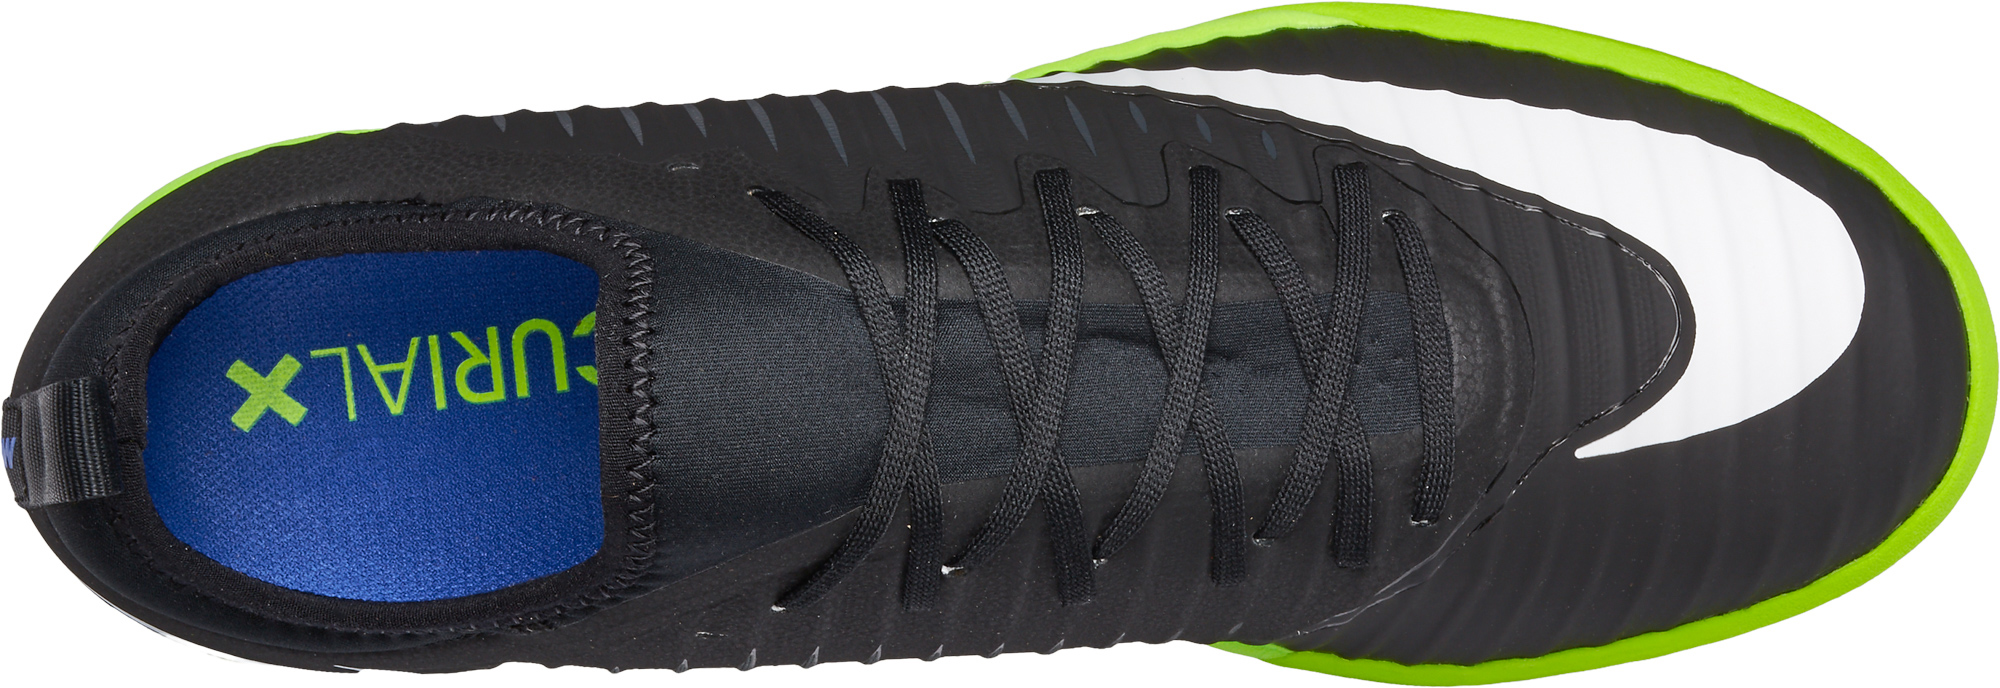 Nike MercurialX Finale TF - Nike Turf Soccer Shoes